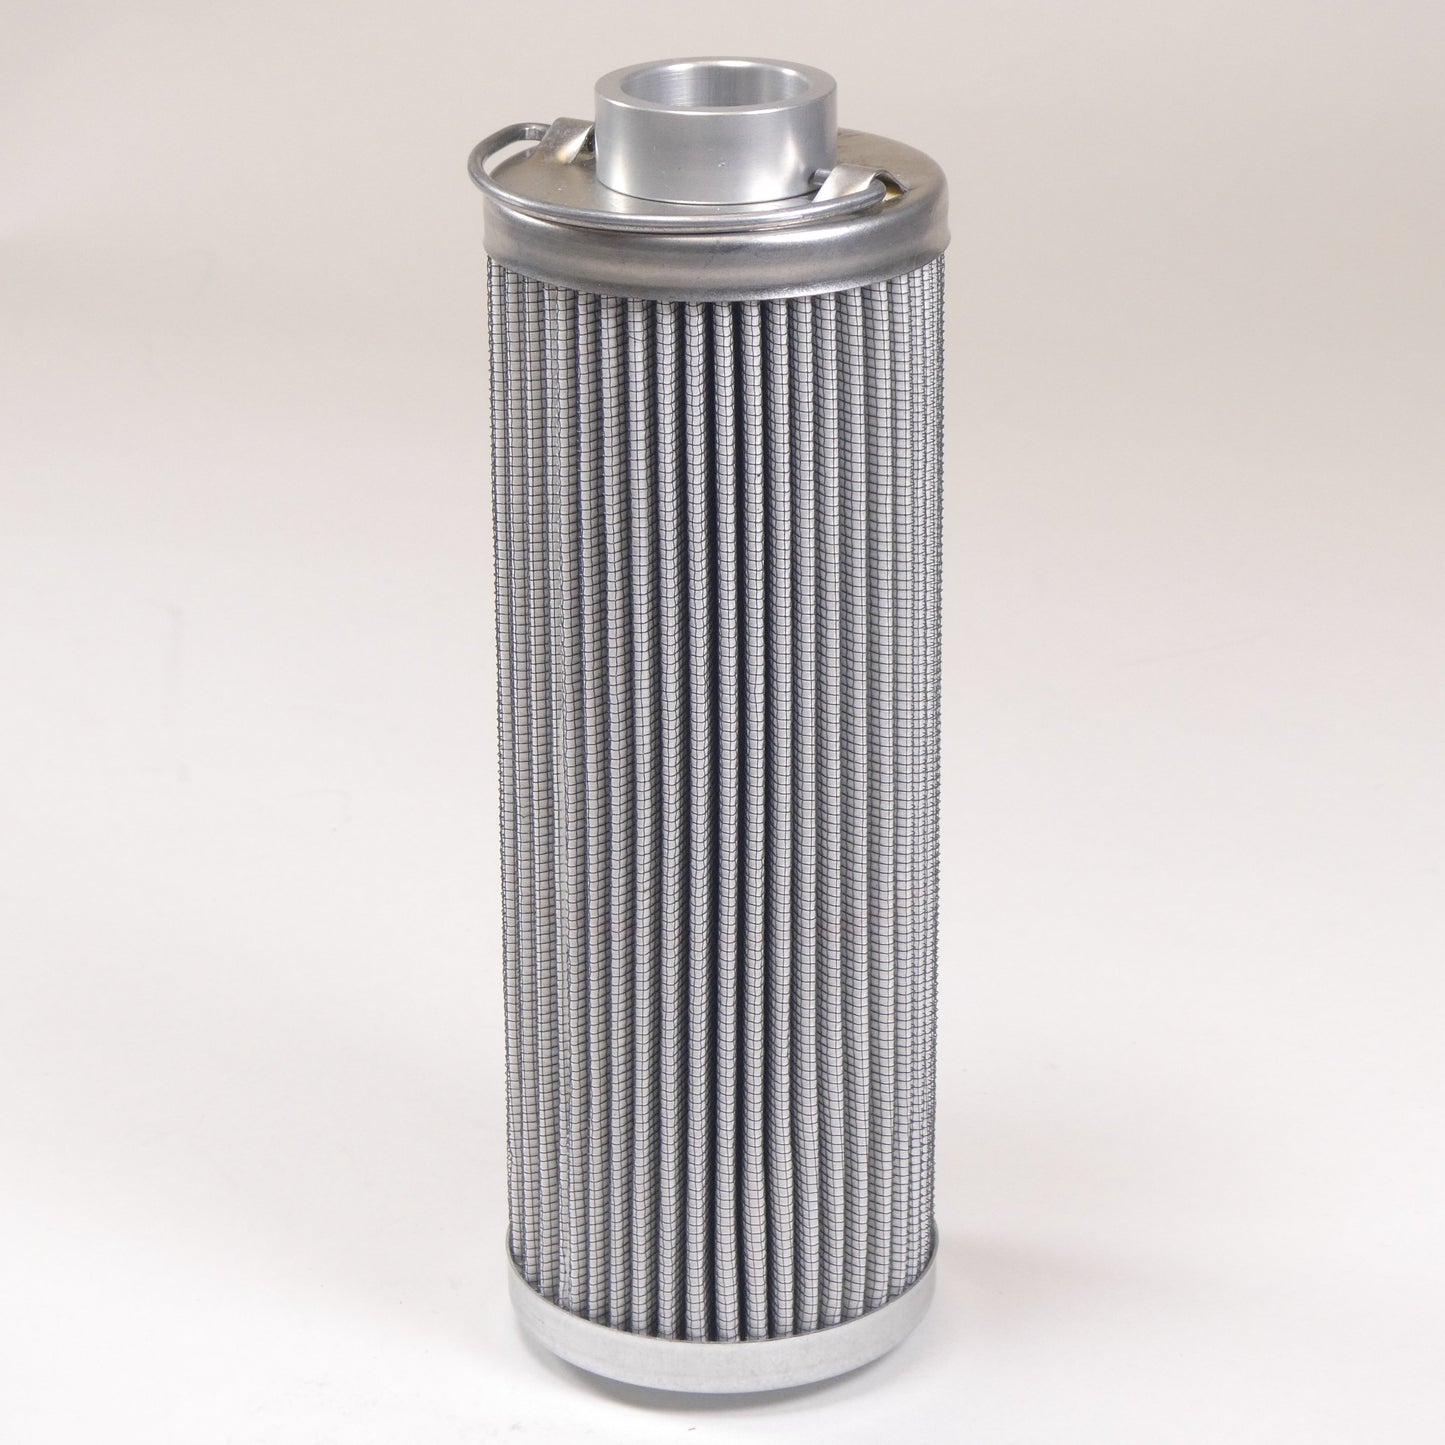 Hydrafil Replacement Filter Element for Cincinnati Milicron 3990689-1